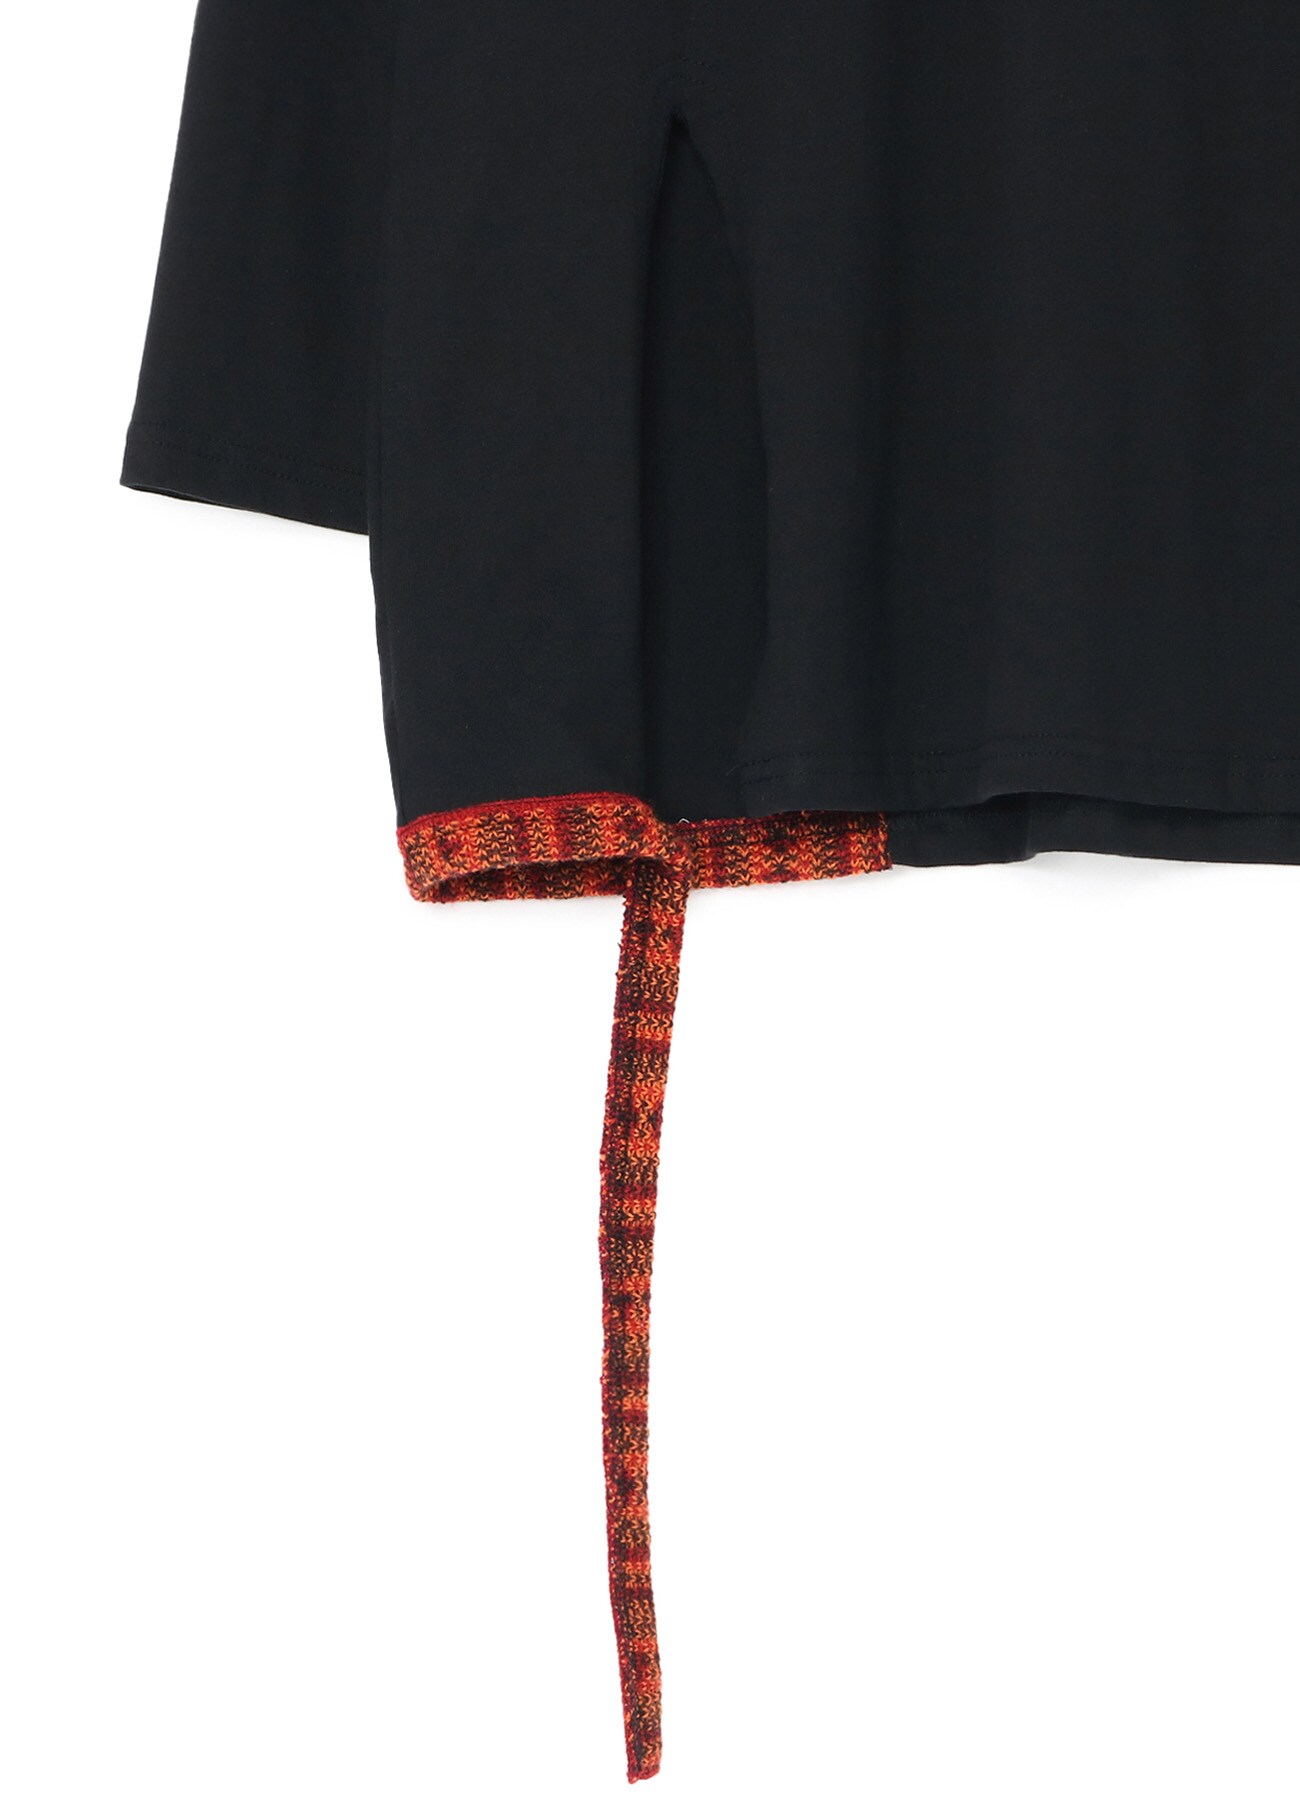 40/2 Jersey Knit Round Neck T-Shirt